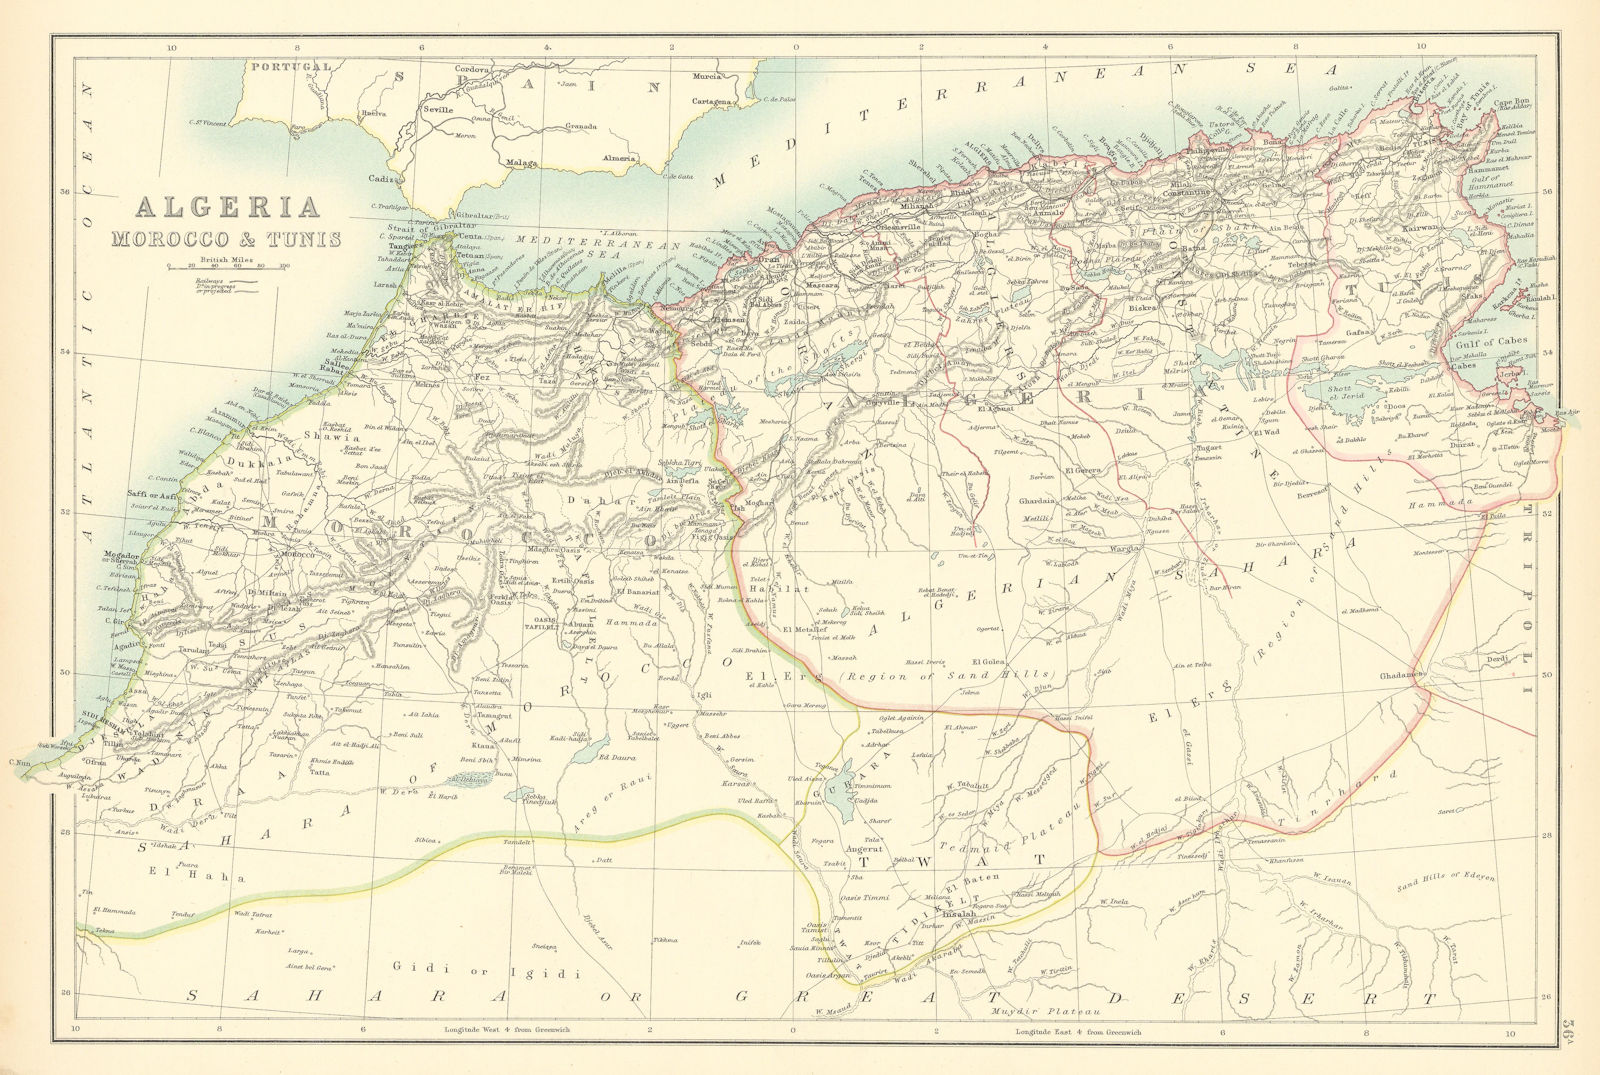 Algeria Morocco & Tunis. North Africa. Tunisia. Maghreb. BARTHOLOMEW 1898 map